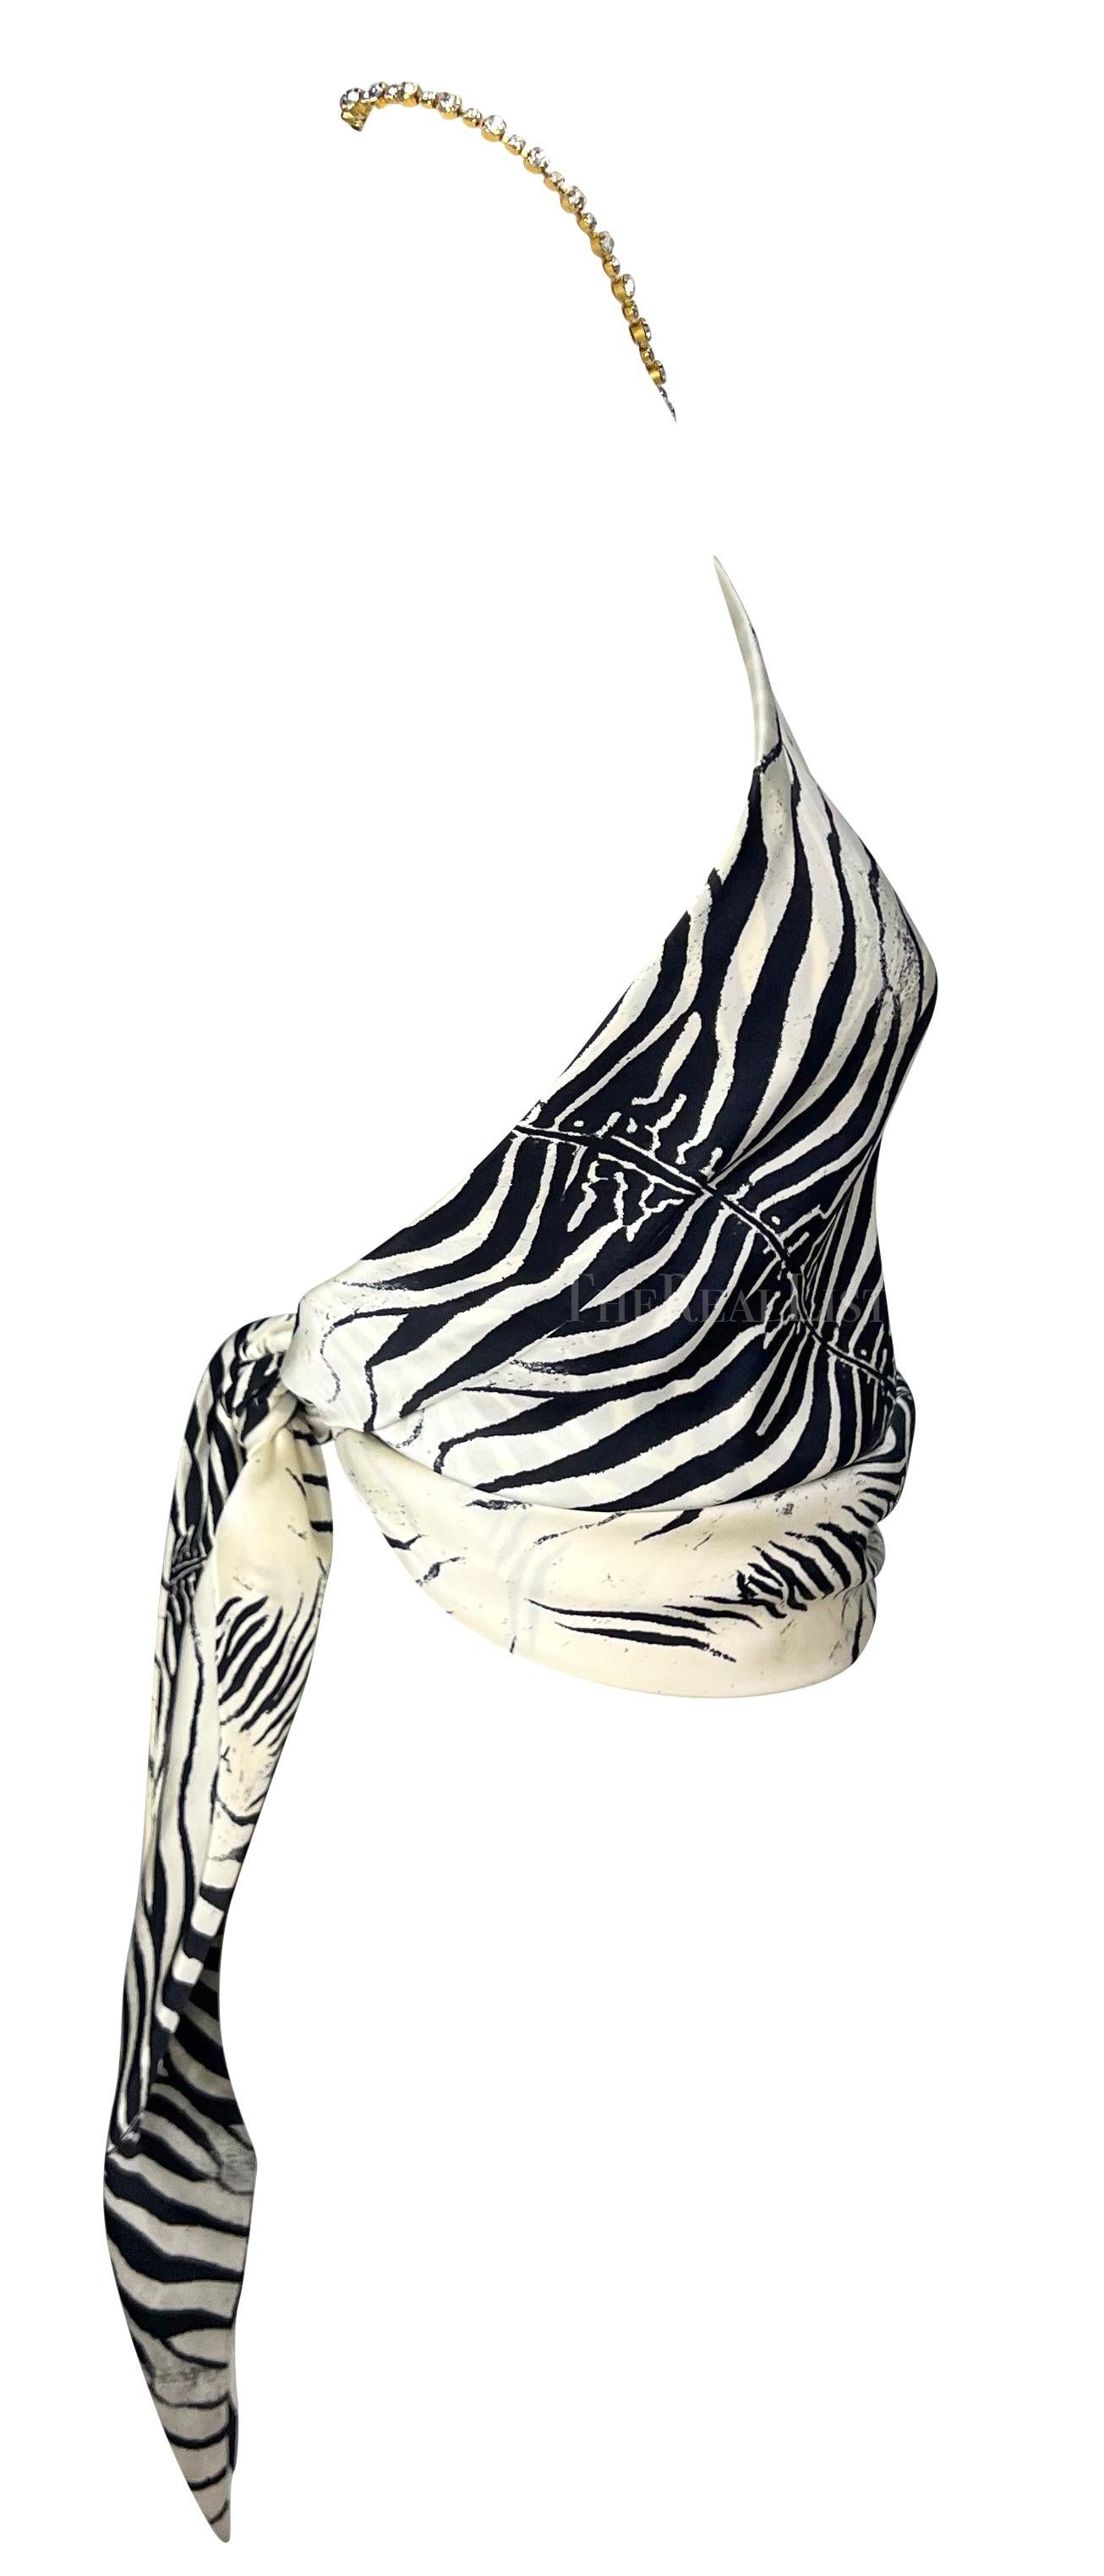 S/S 2000 Roberto Cavalli Rhinestone Zebra Print Triangle Silk Scarf Crop Top For Sale 2